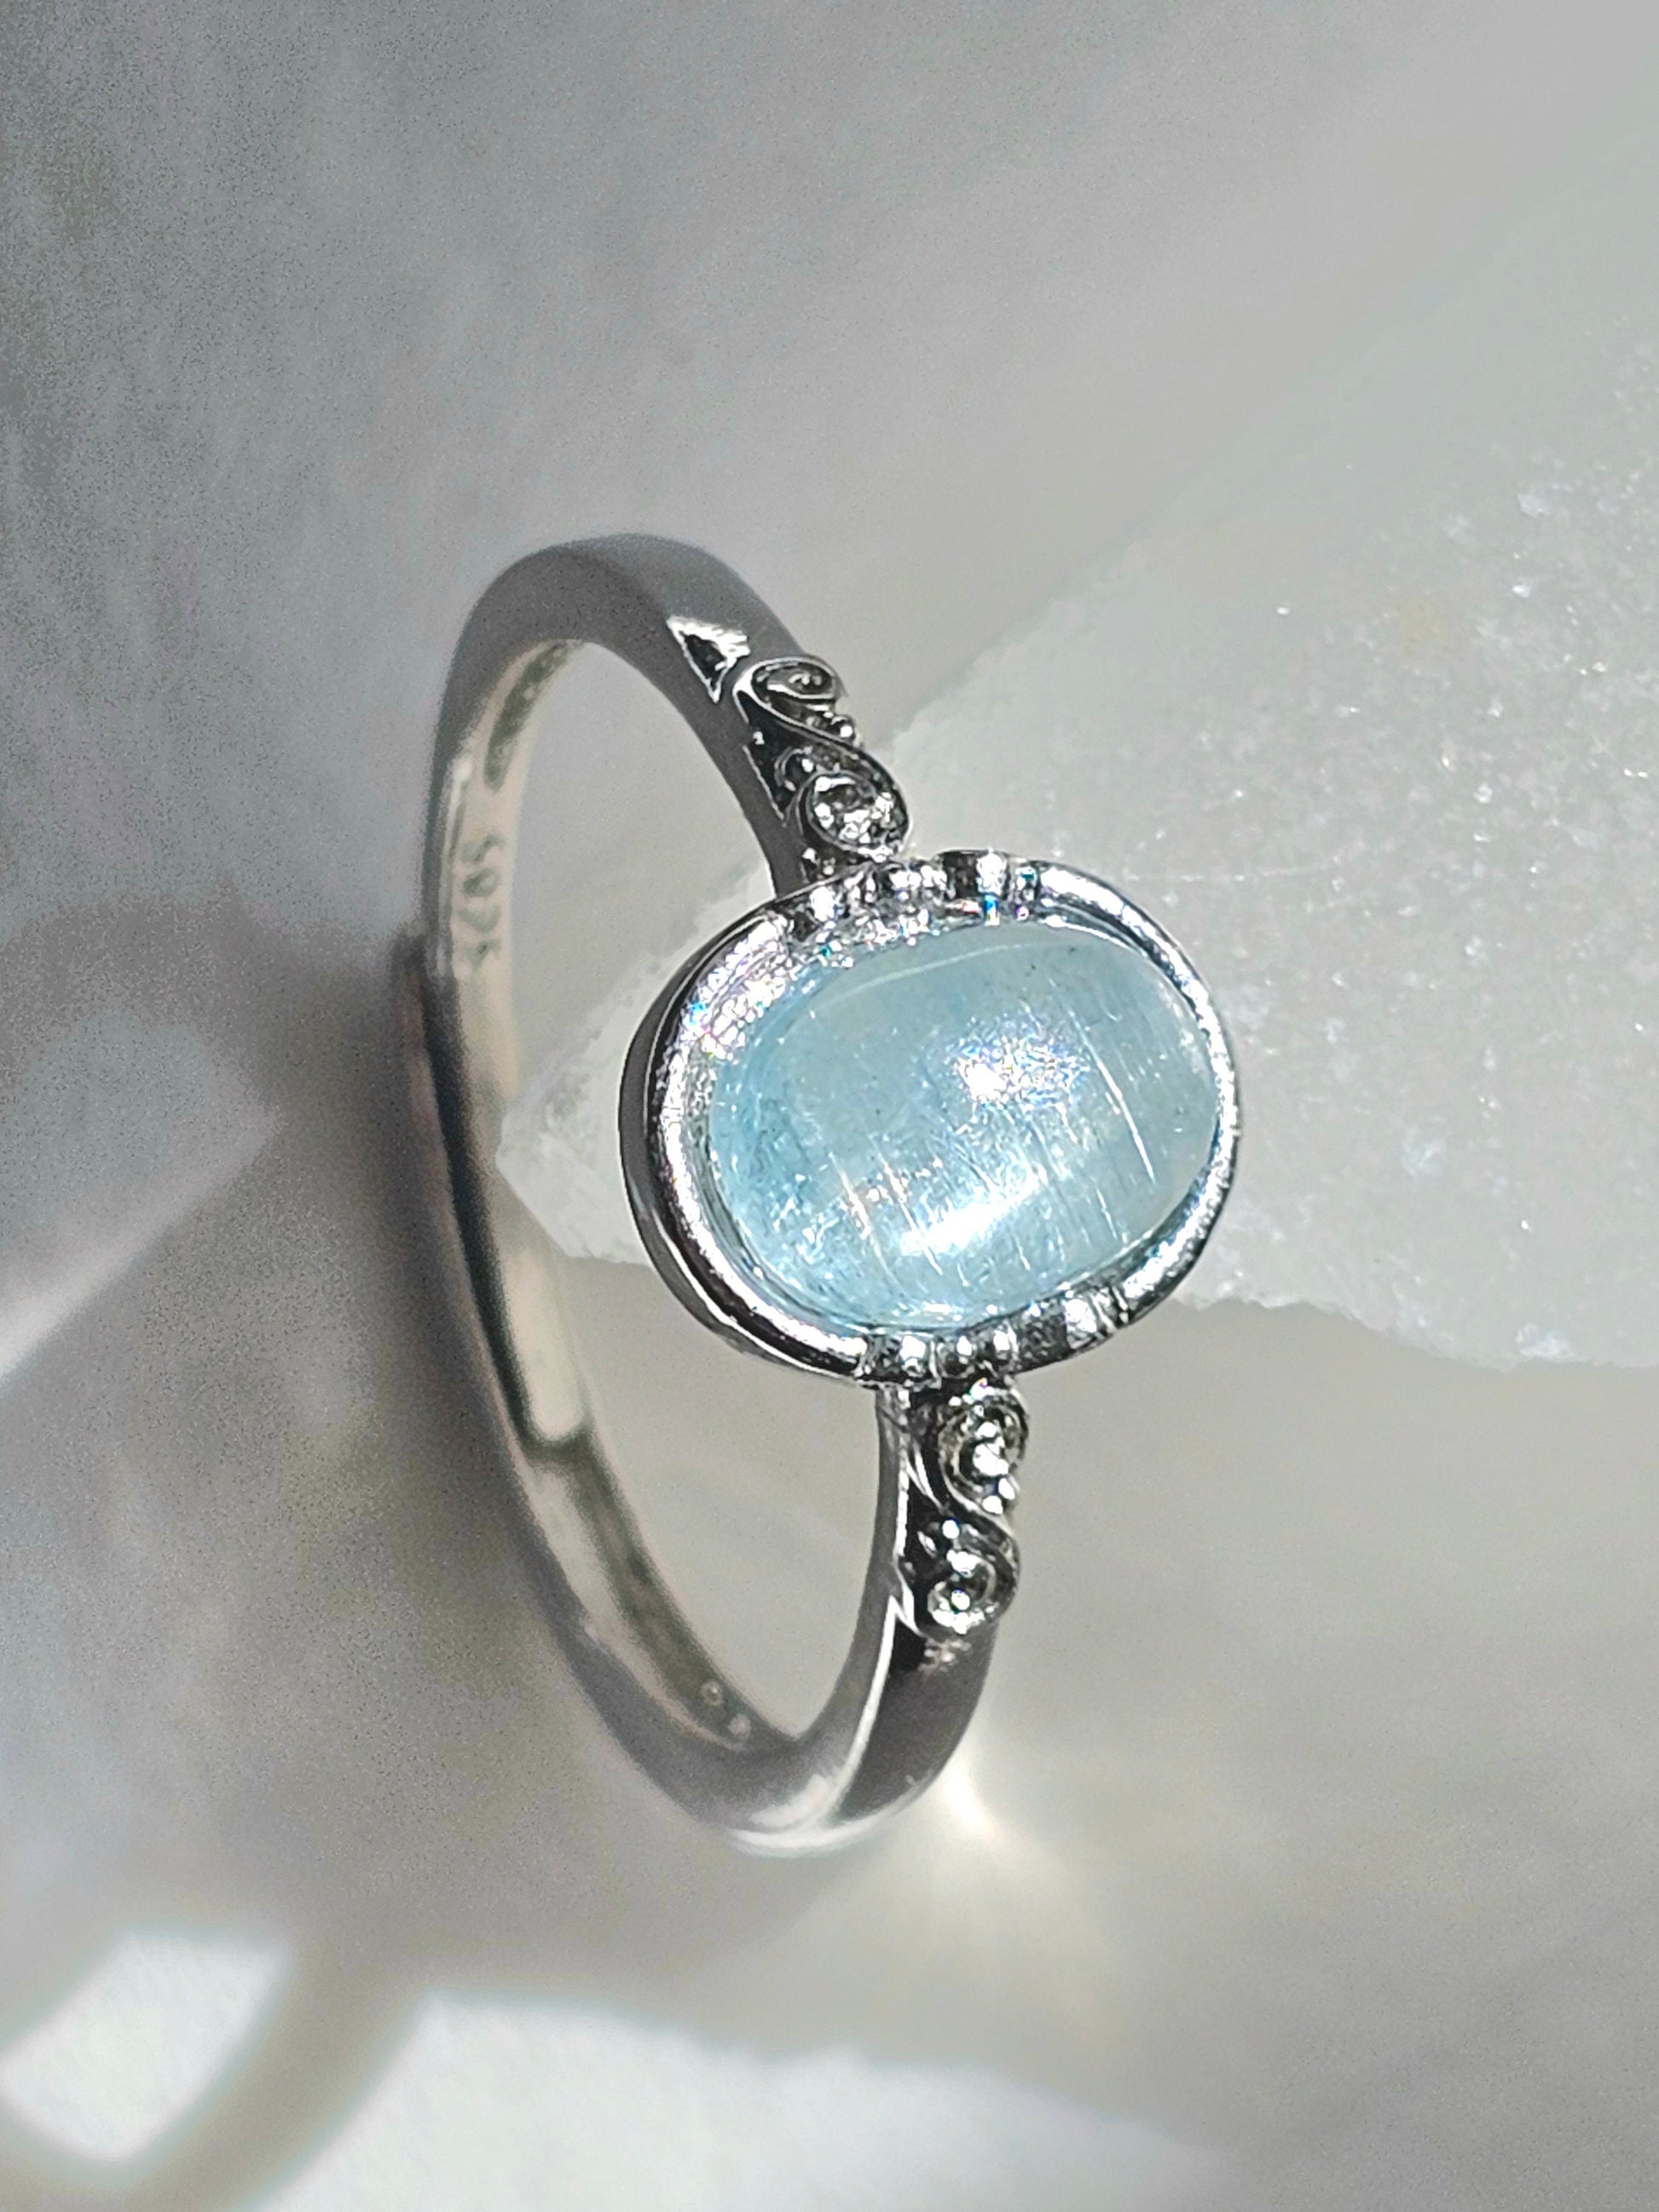 Aquamarine oval 925 silver adjustable ring